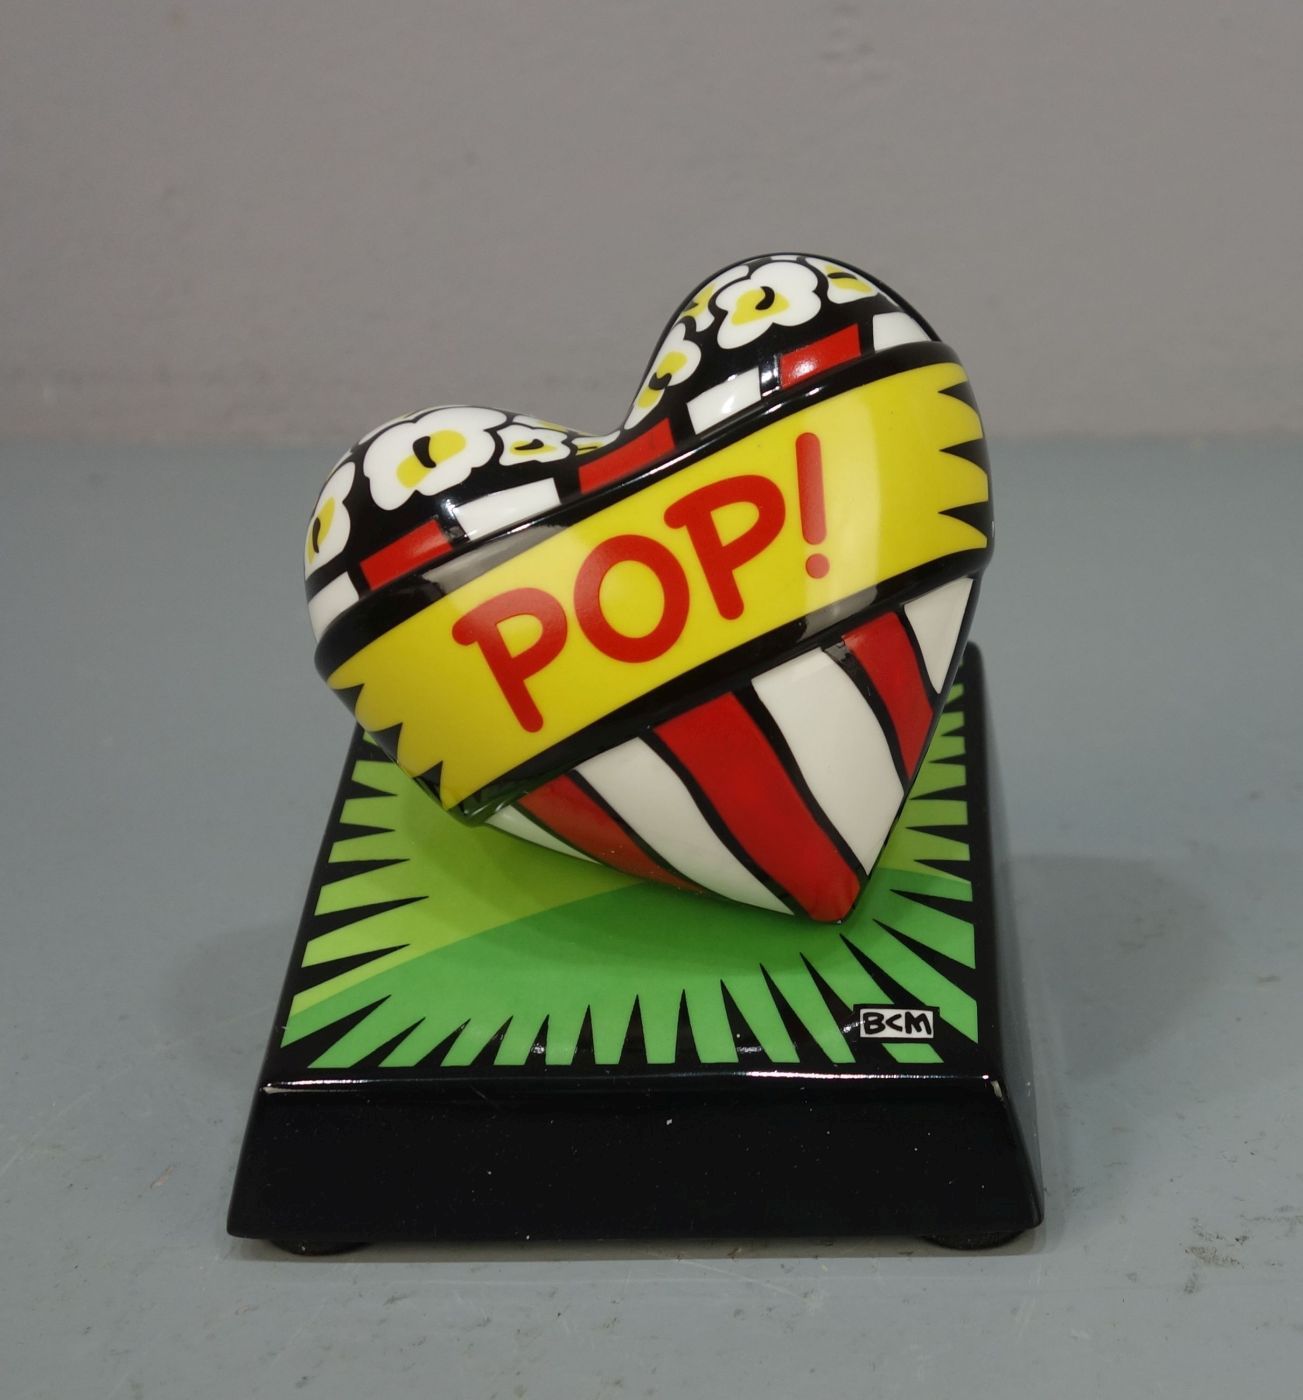 BURTON MORRIS PORZELLANSKULPTUR: "LOVE POP!"